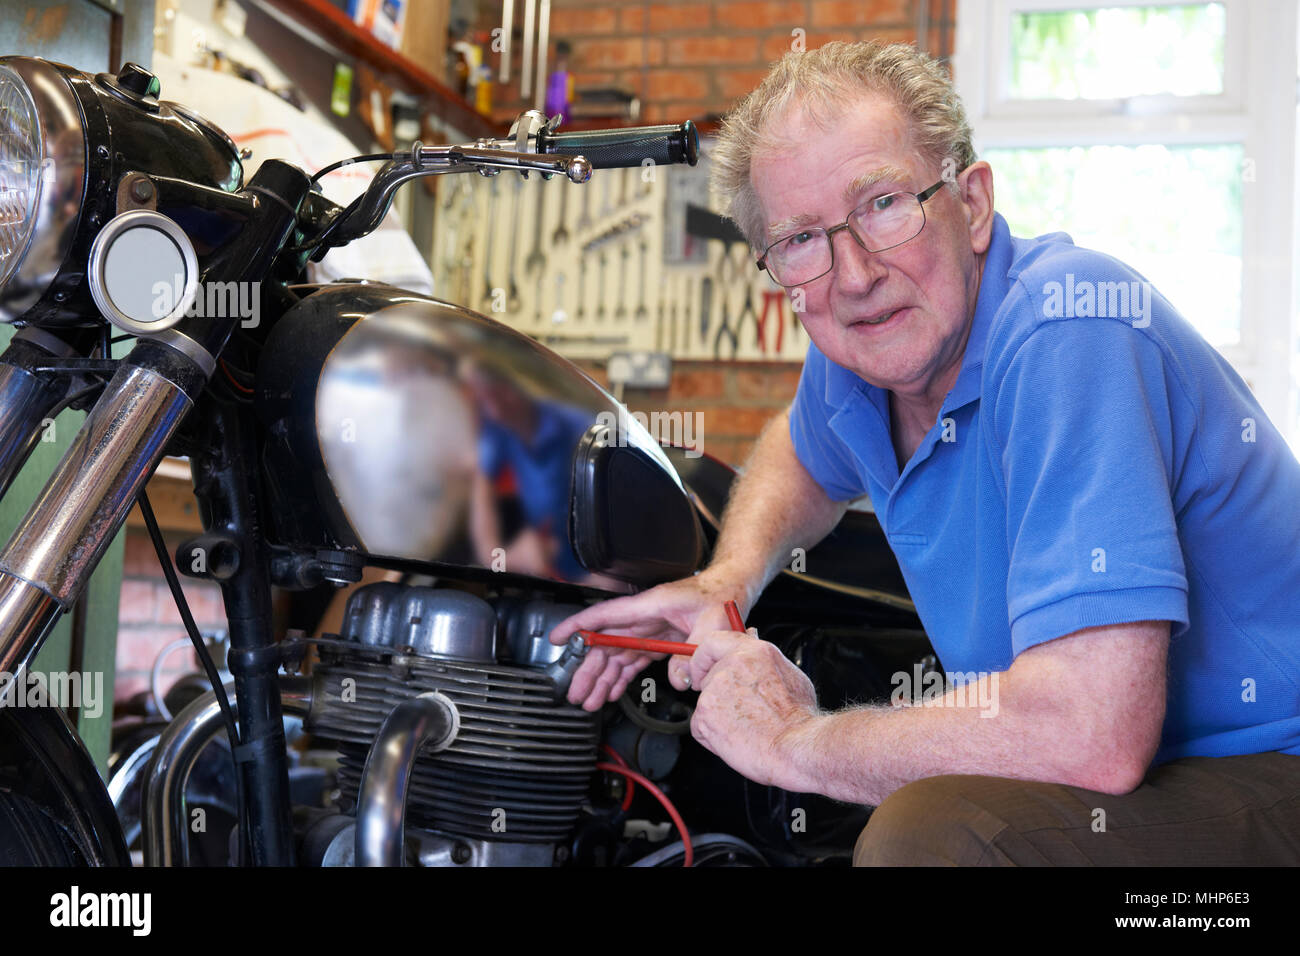 Portrait Of Senior Man Working On Vintage Motorcycle In Garage Stock Photo